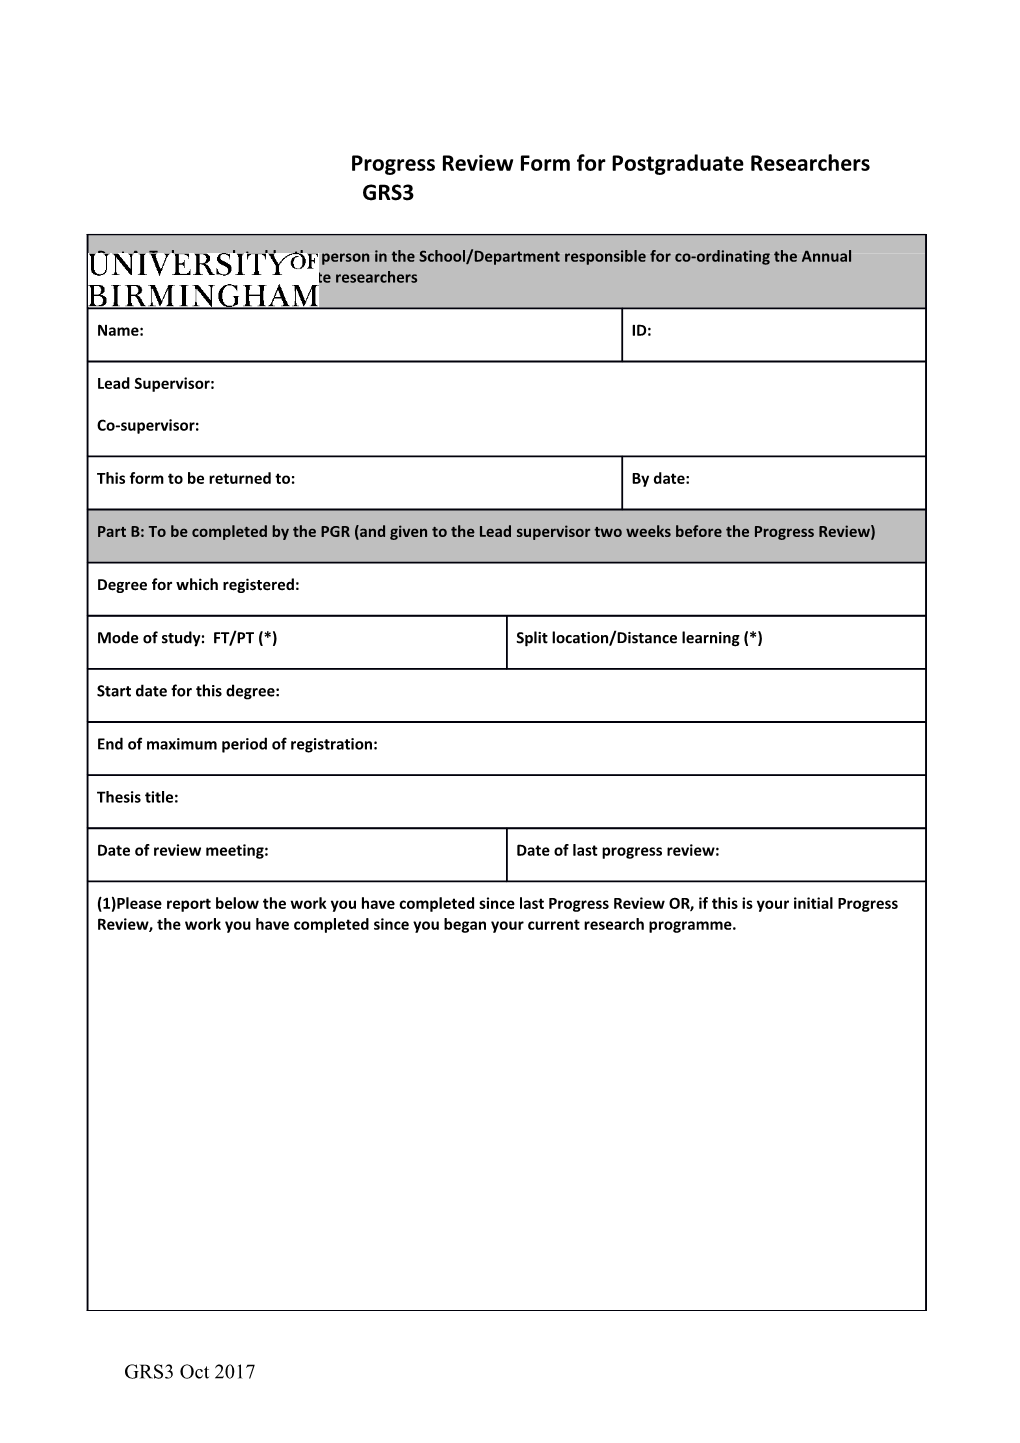 Progress Review Form for Postgraduate Researchers GRS3